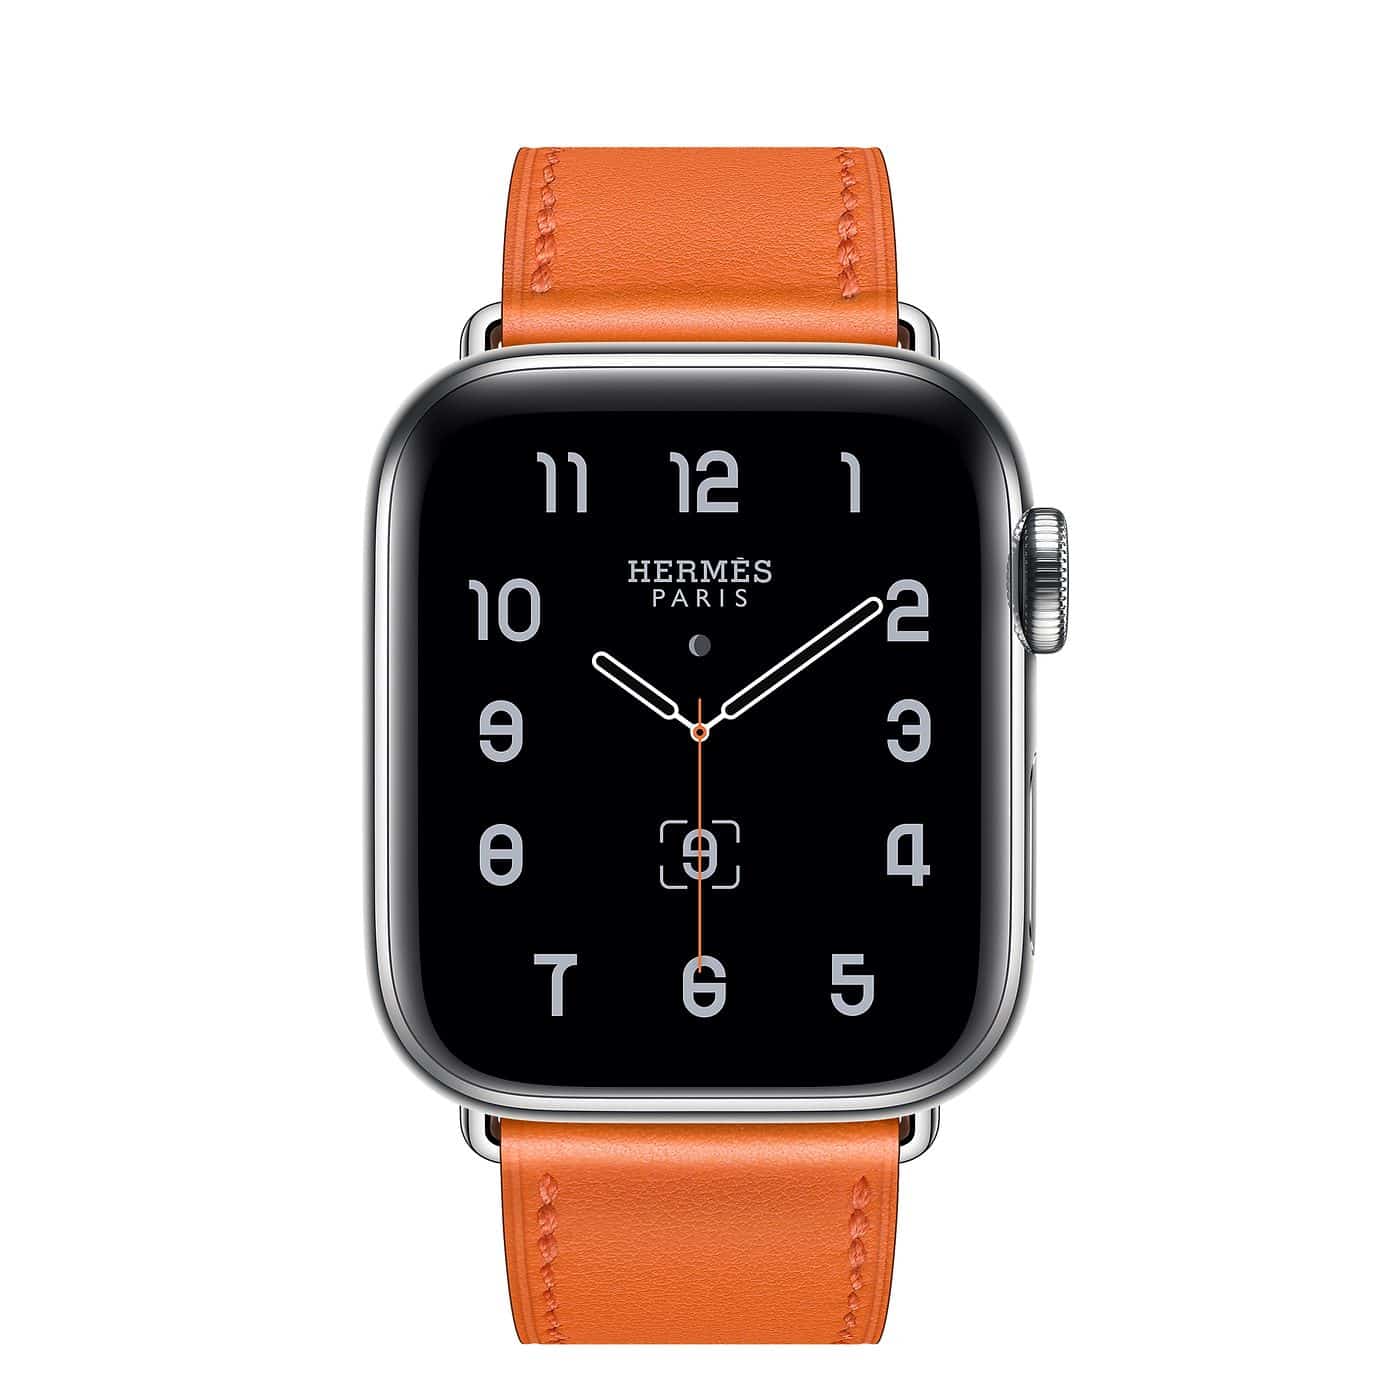 Apple Watch Series 5 Hermes 40mm dumortr.com